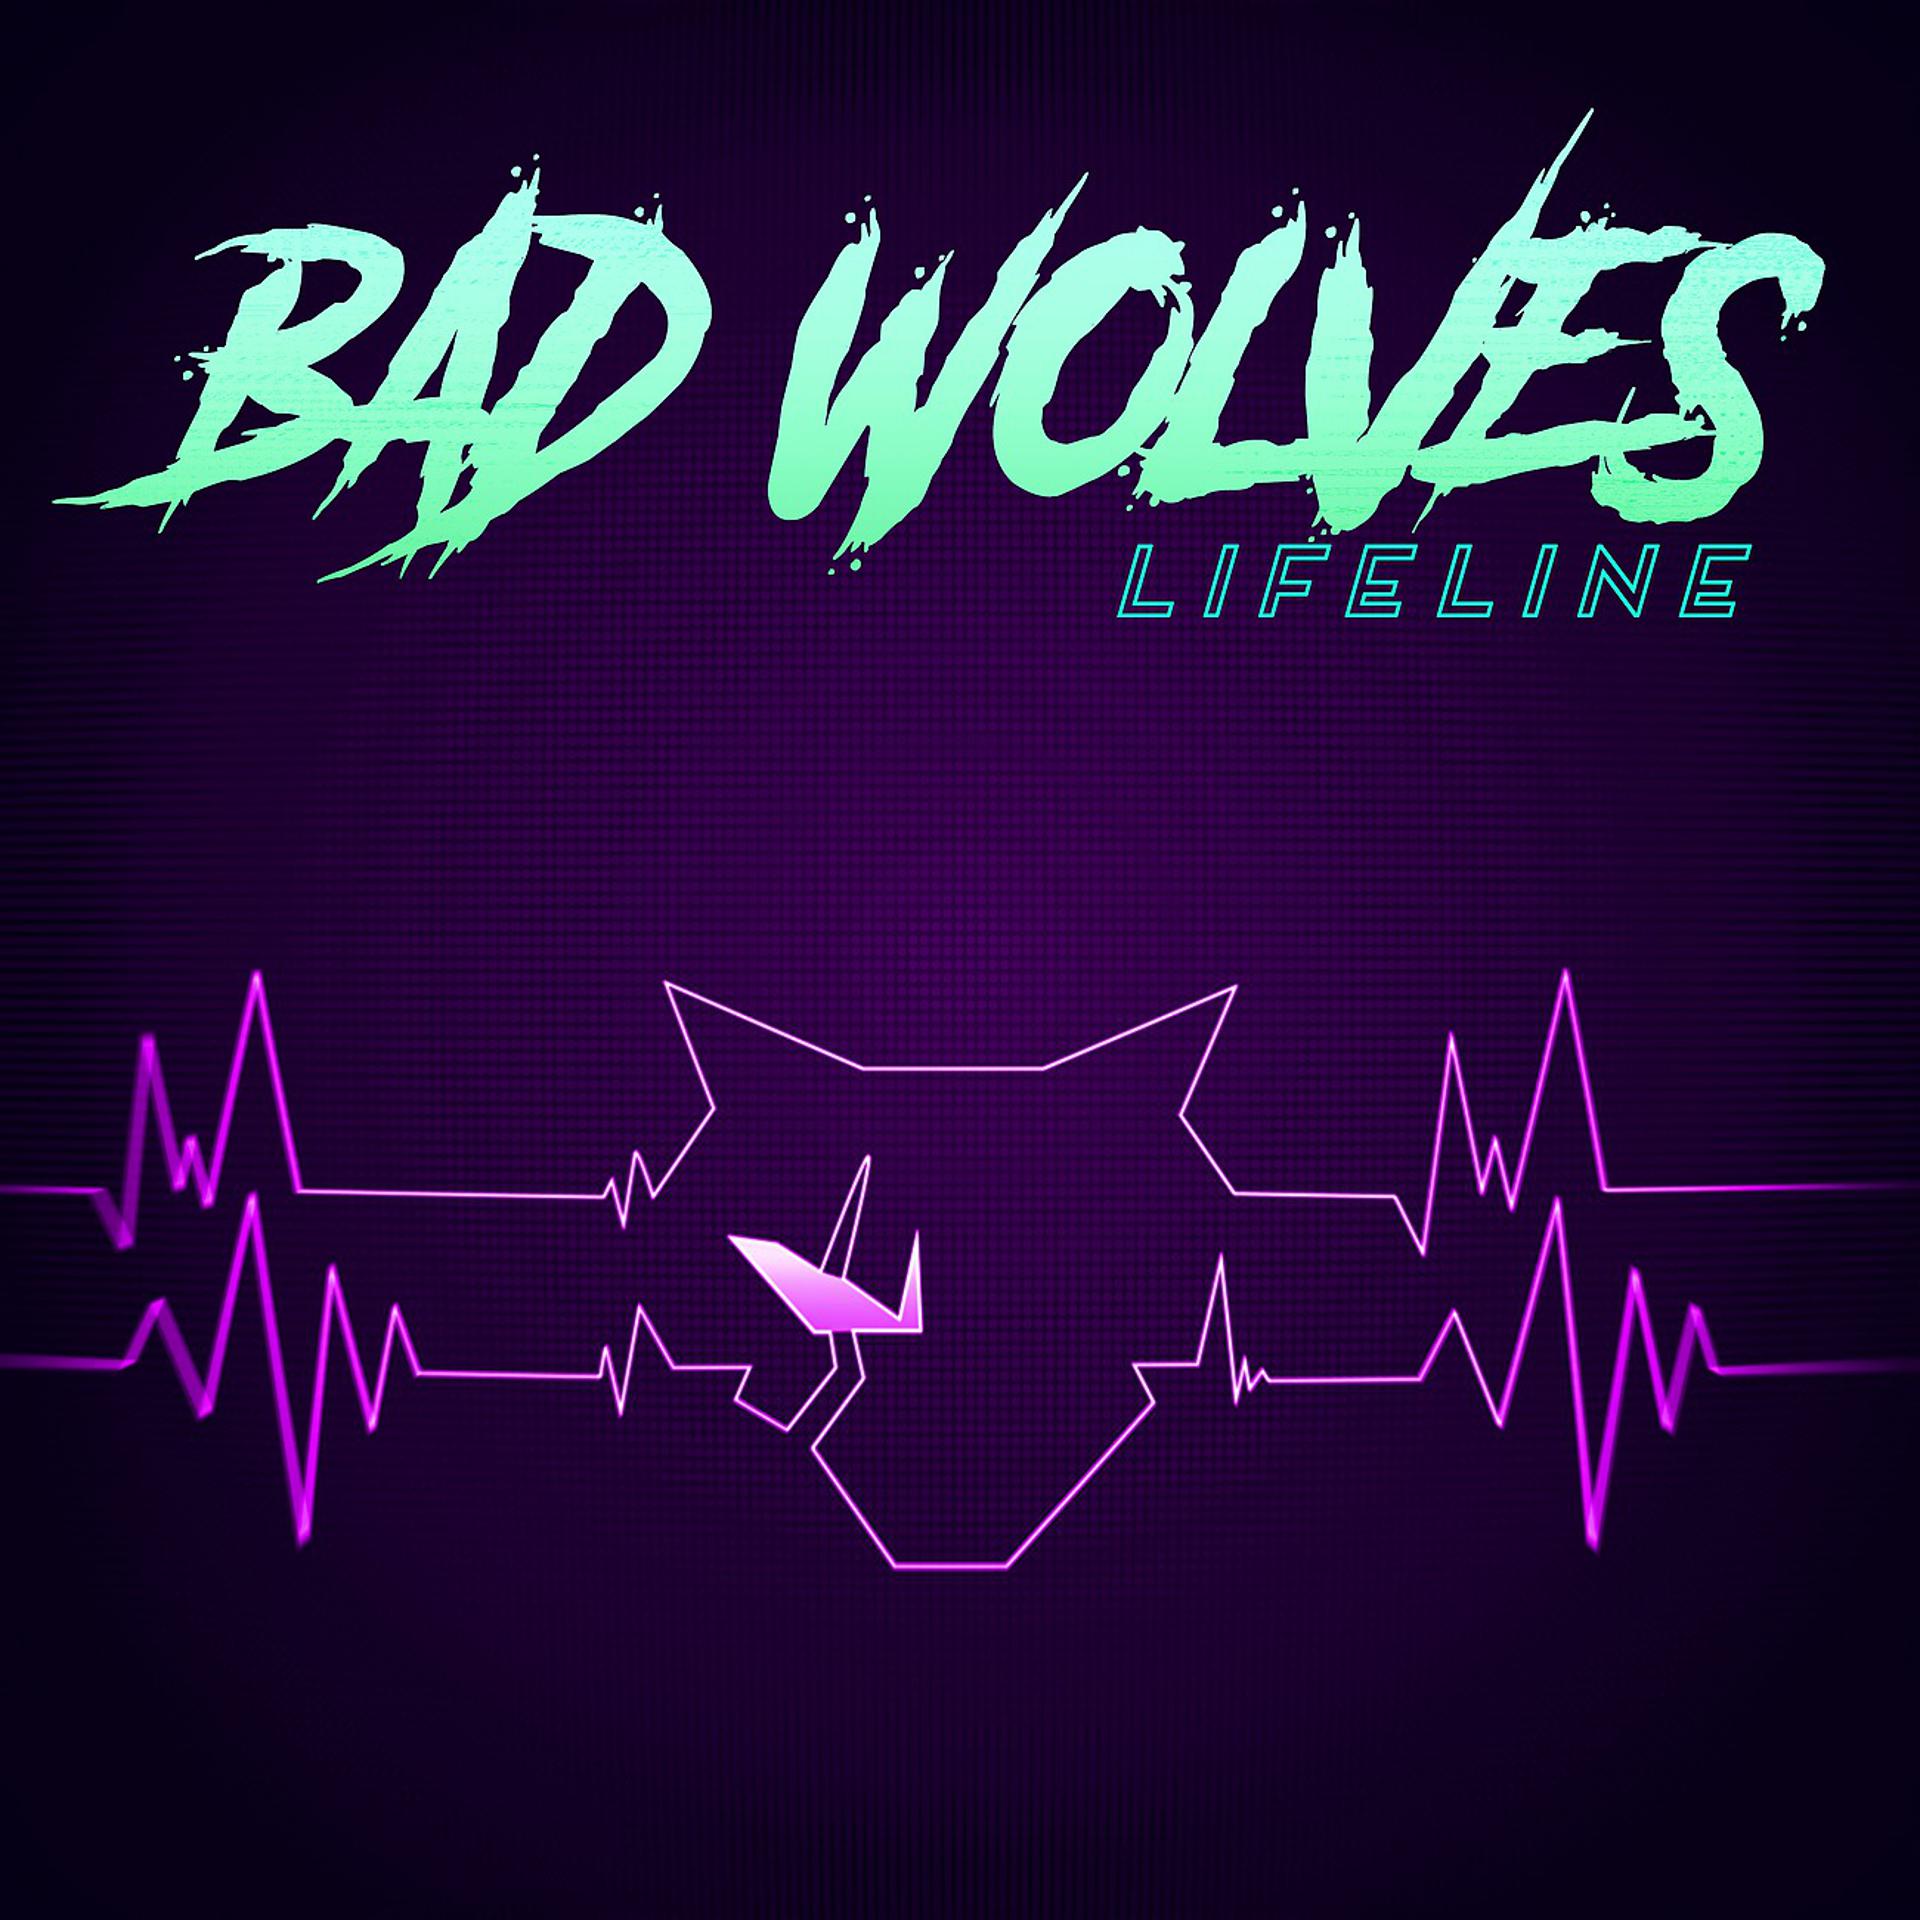 Группа Bad Wolves. Bad Wolves обложки альбомов. Bad Wolves Lifeline. Bad Wolves New album 2023.